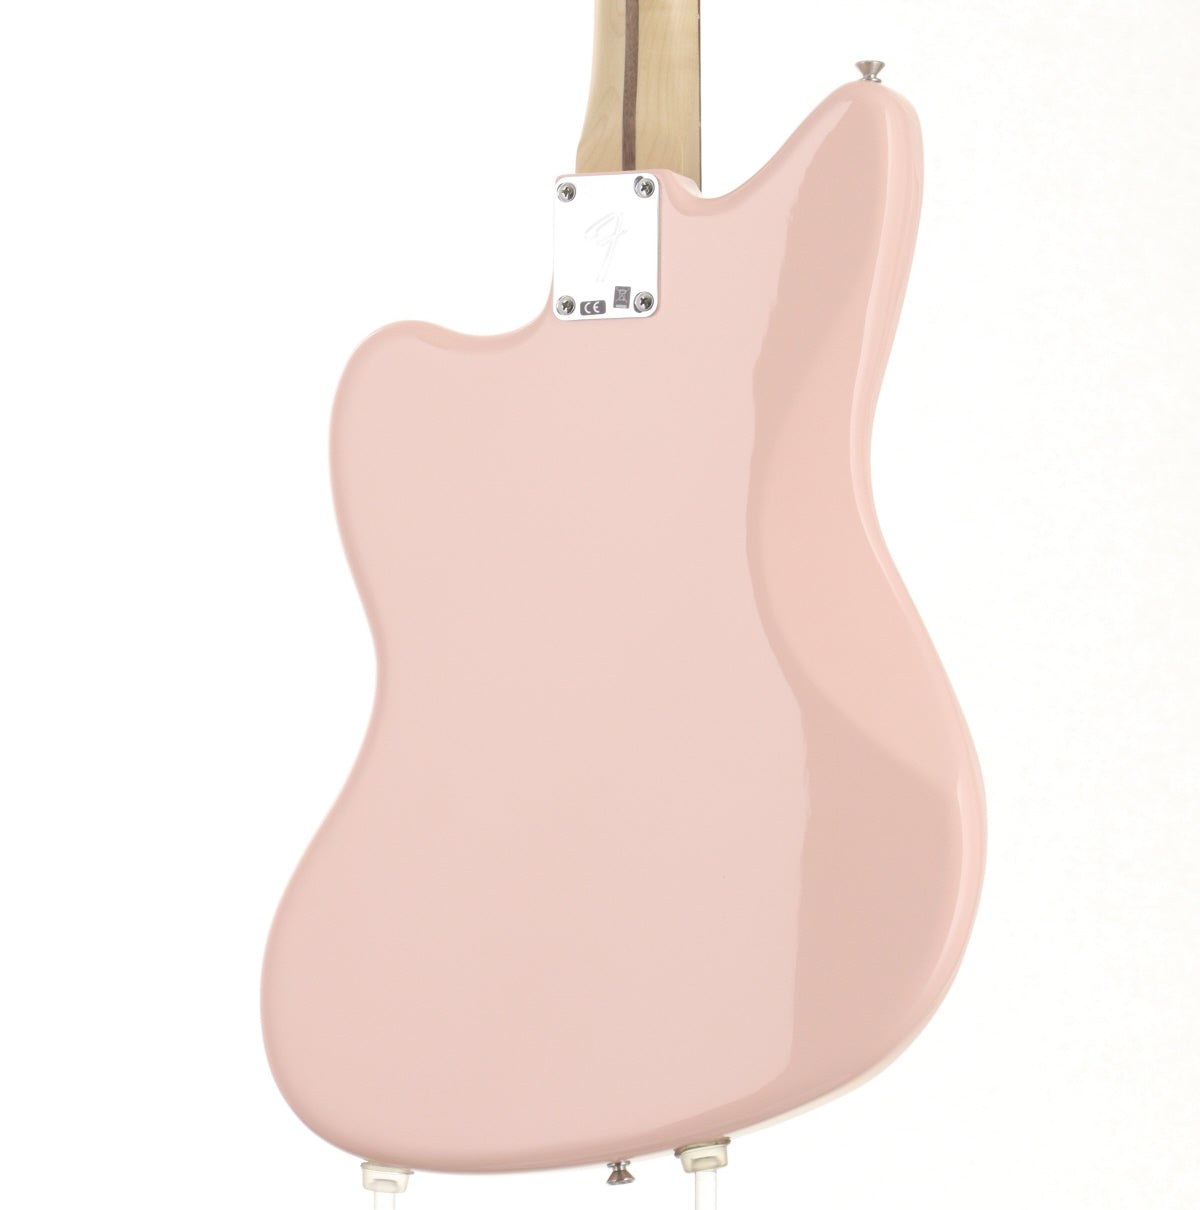 [SN MX19227367] USED Fender / Limited Edition Player Jazzmaster Shell Pink/Pau Ferro 2020 [08]